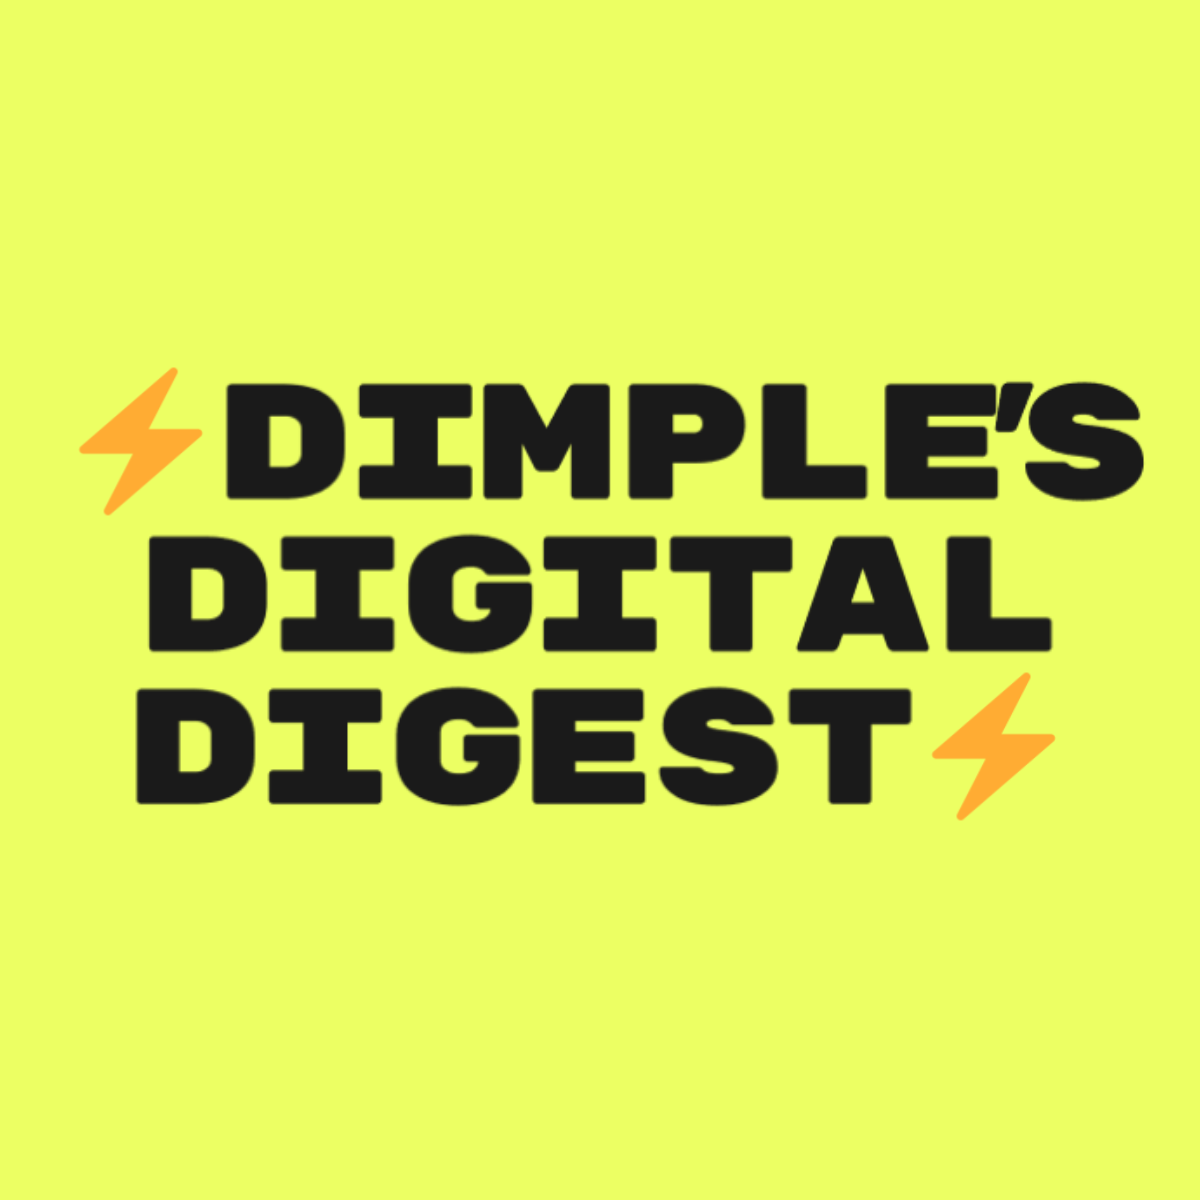 ⚡️ Dimple’s Digital Digest ⚡️